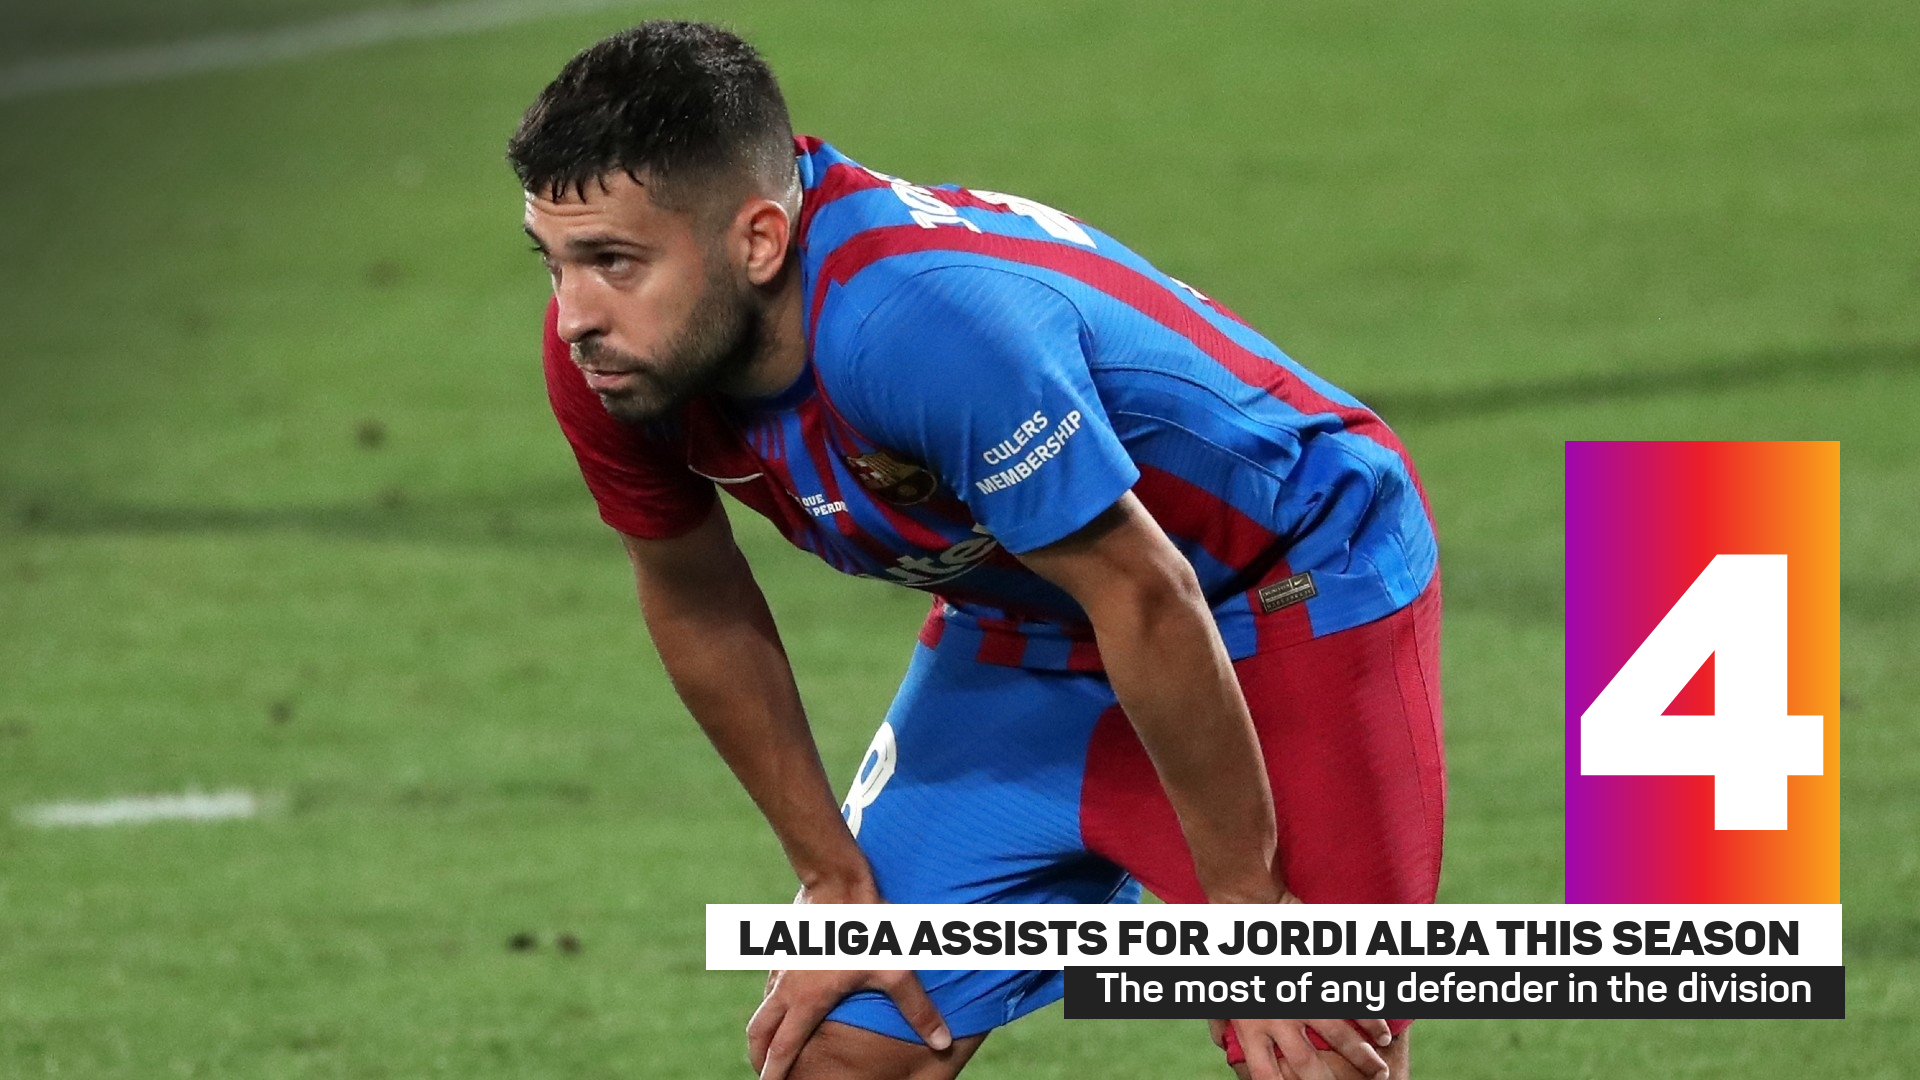 Jordi Alba has four LaLiga assists this season